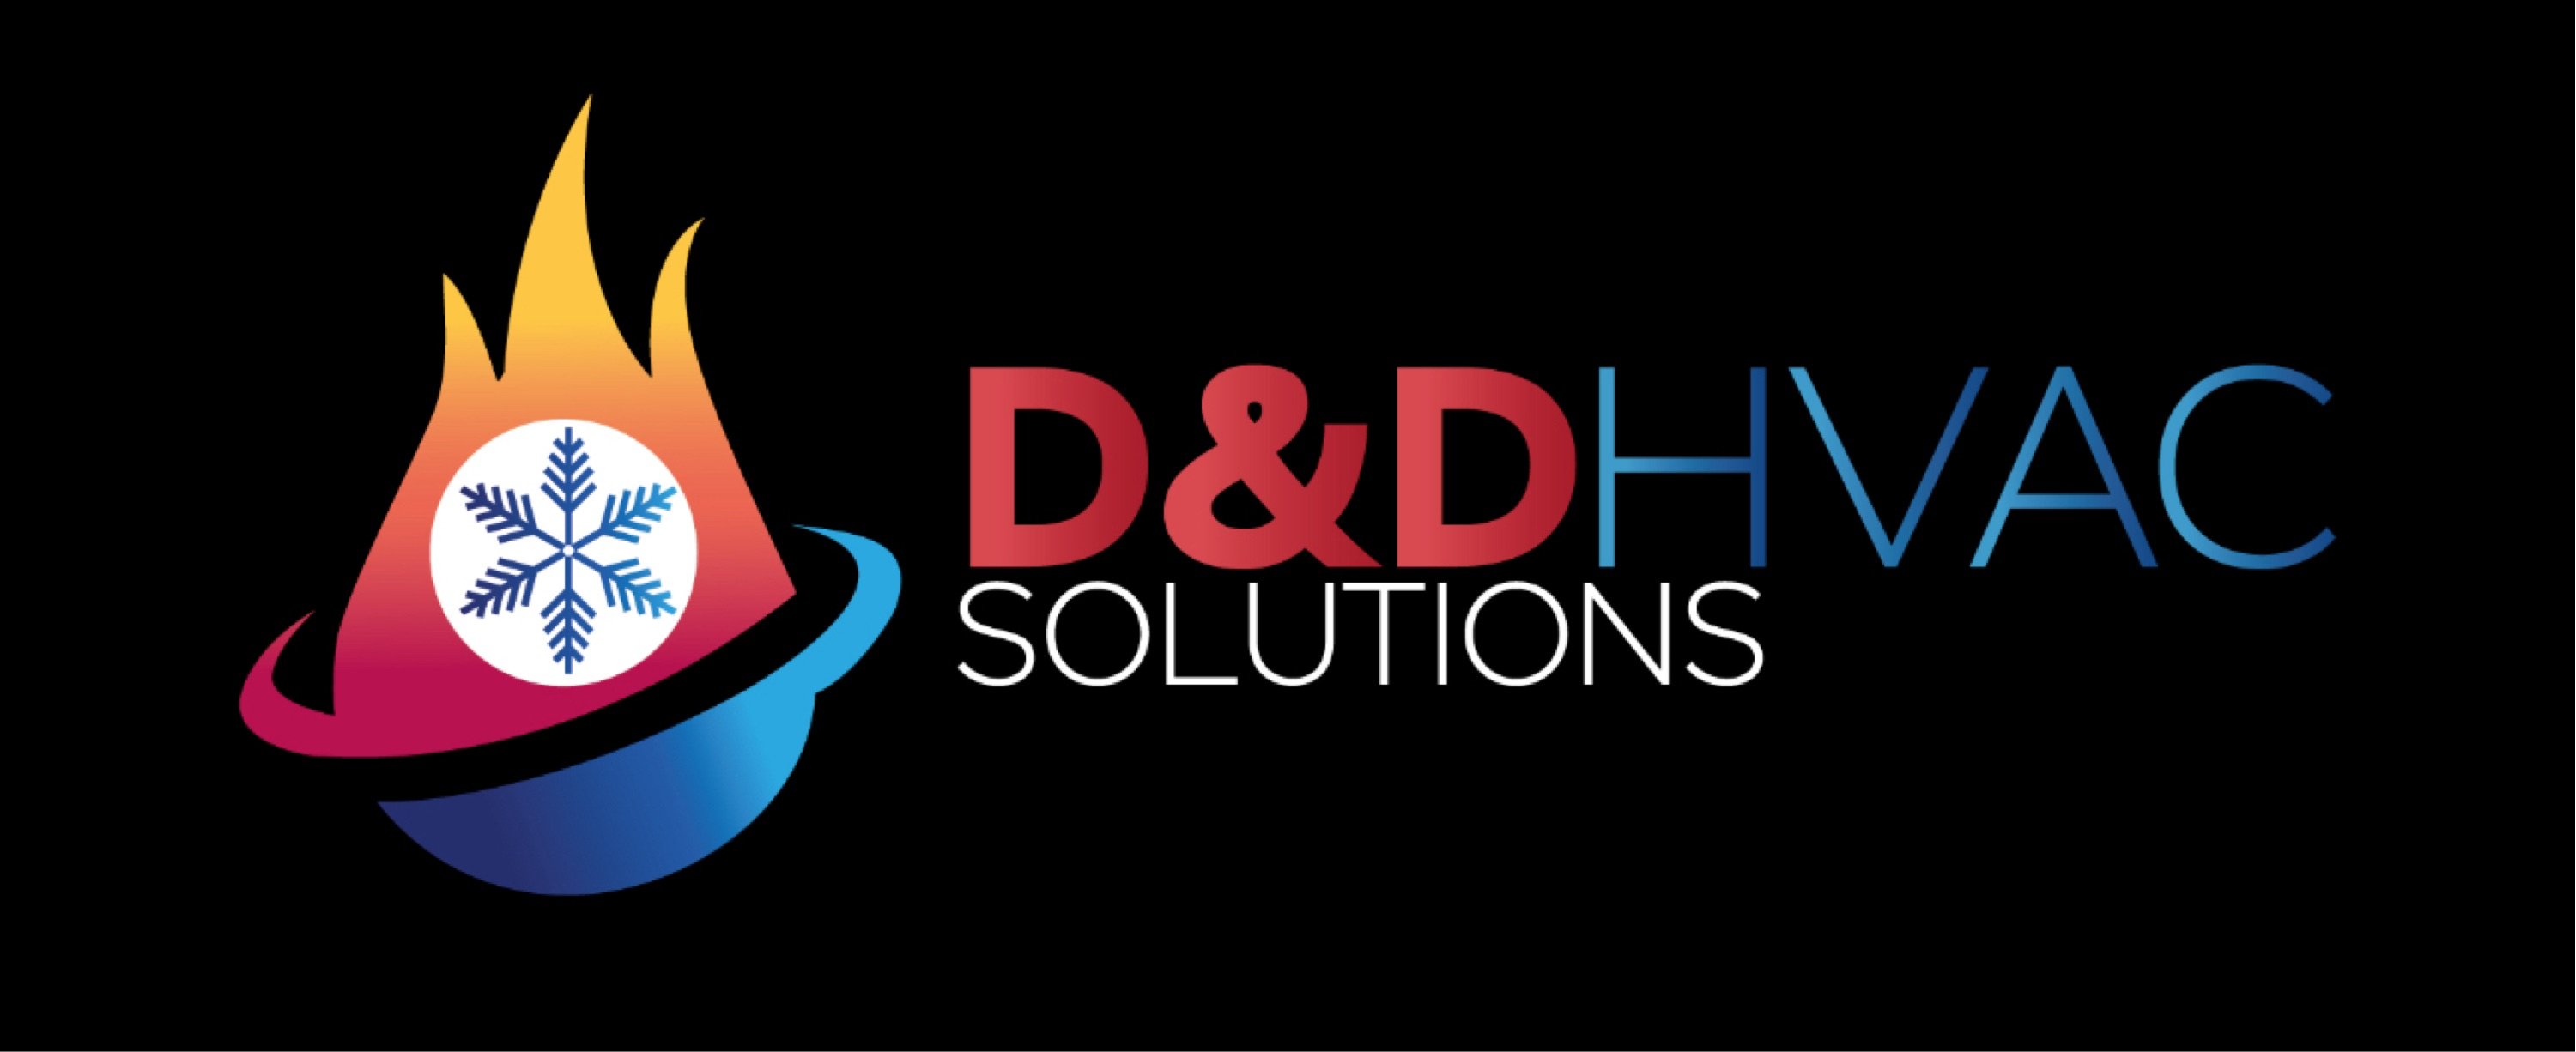 D & D HVAC SOLUTIONS LLC Logo